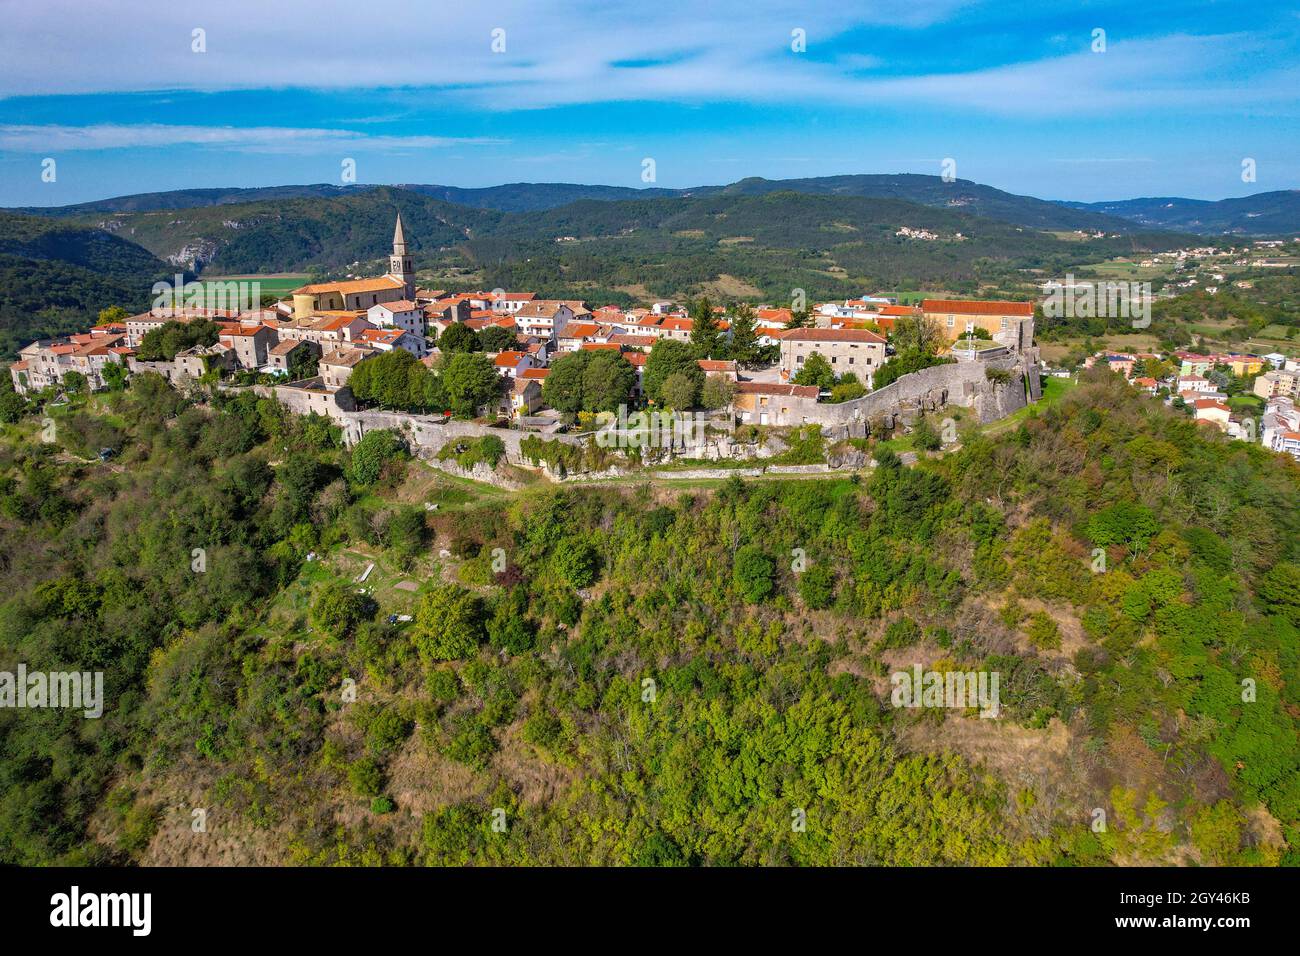 DJI Mavic Air 2S aerial drone photographs of the ancient hill town of Buzet, Istria, Croatia Stock Photo